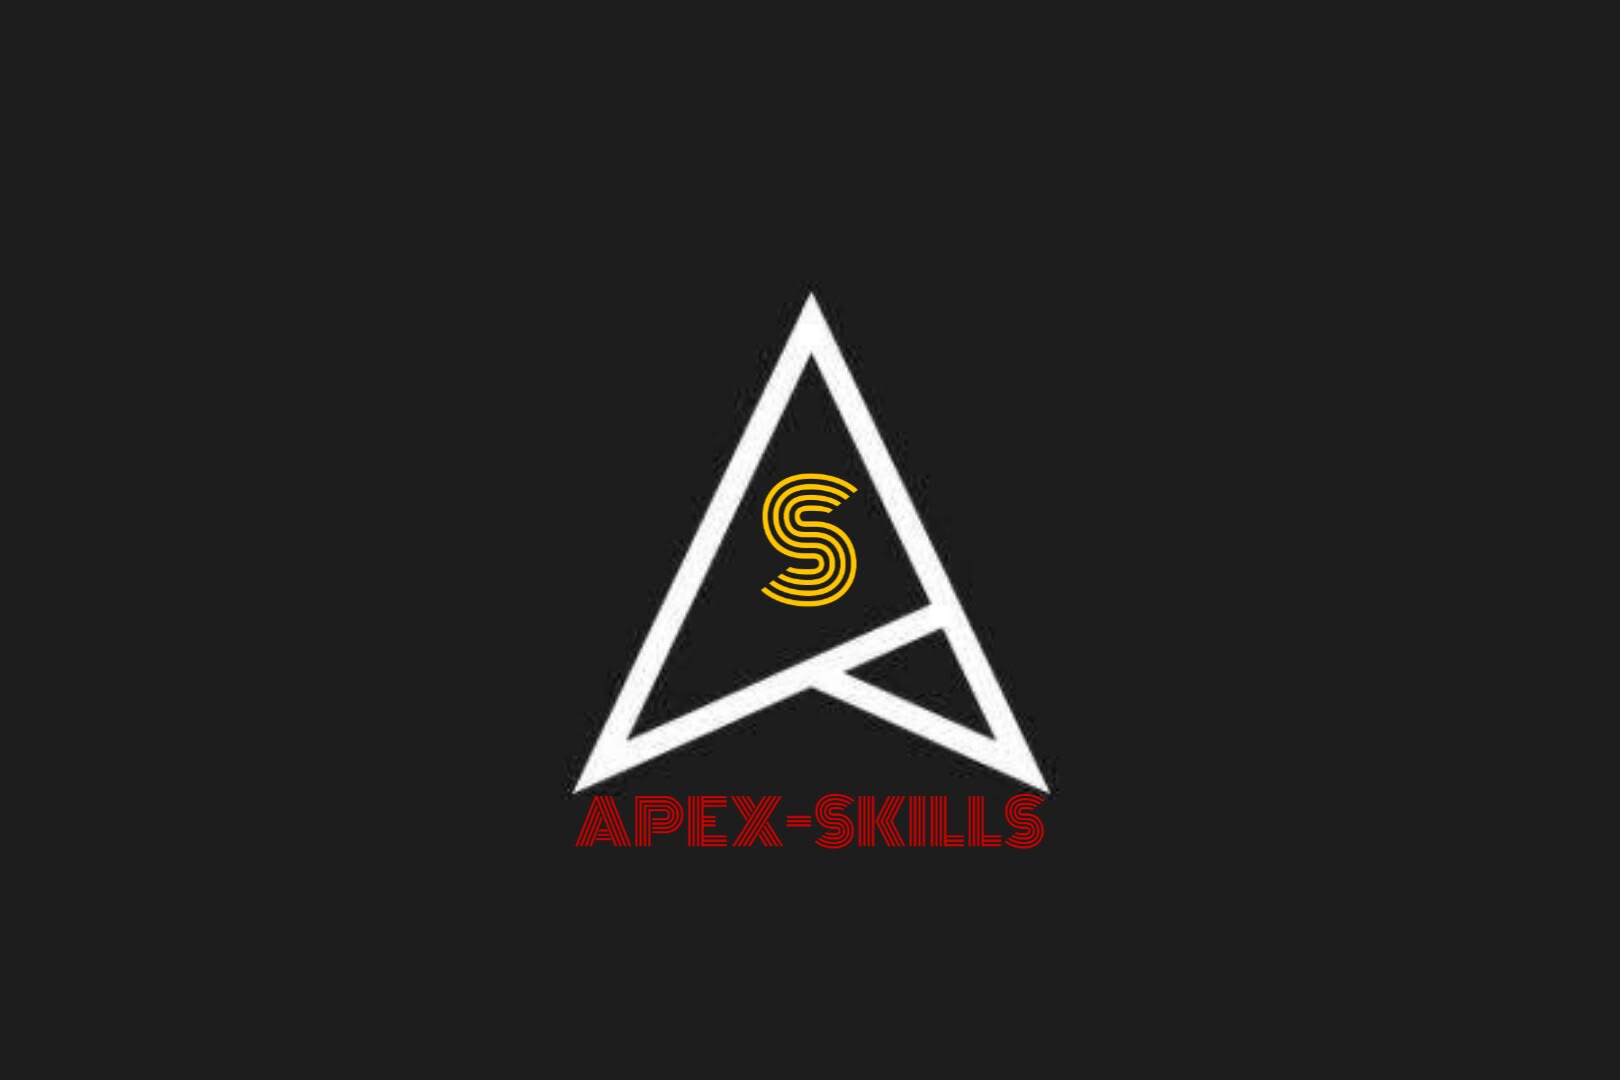 APEX-SKILLS